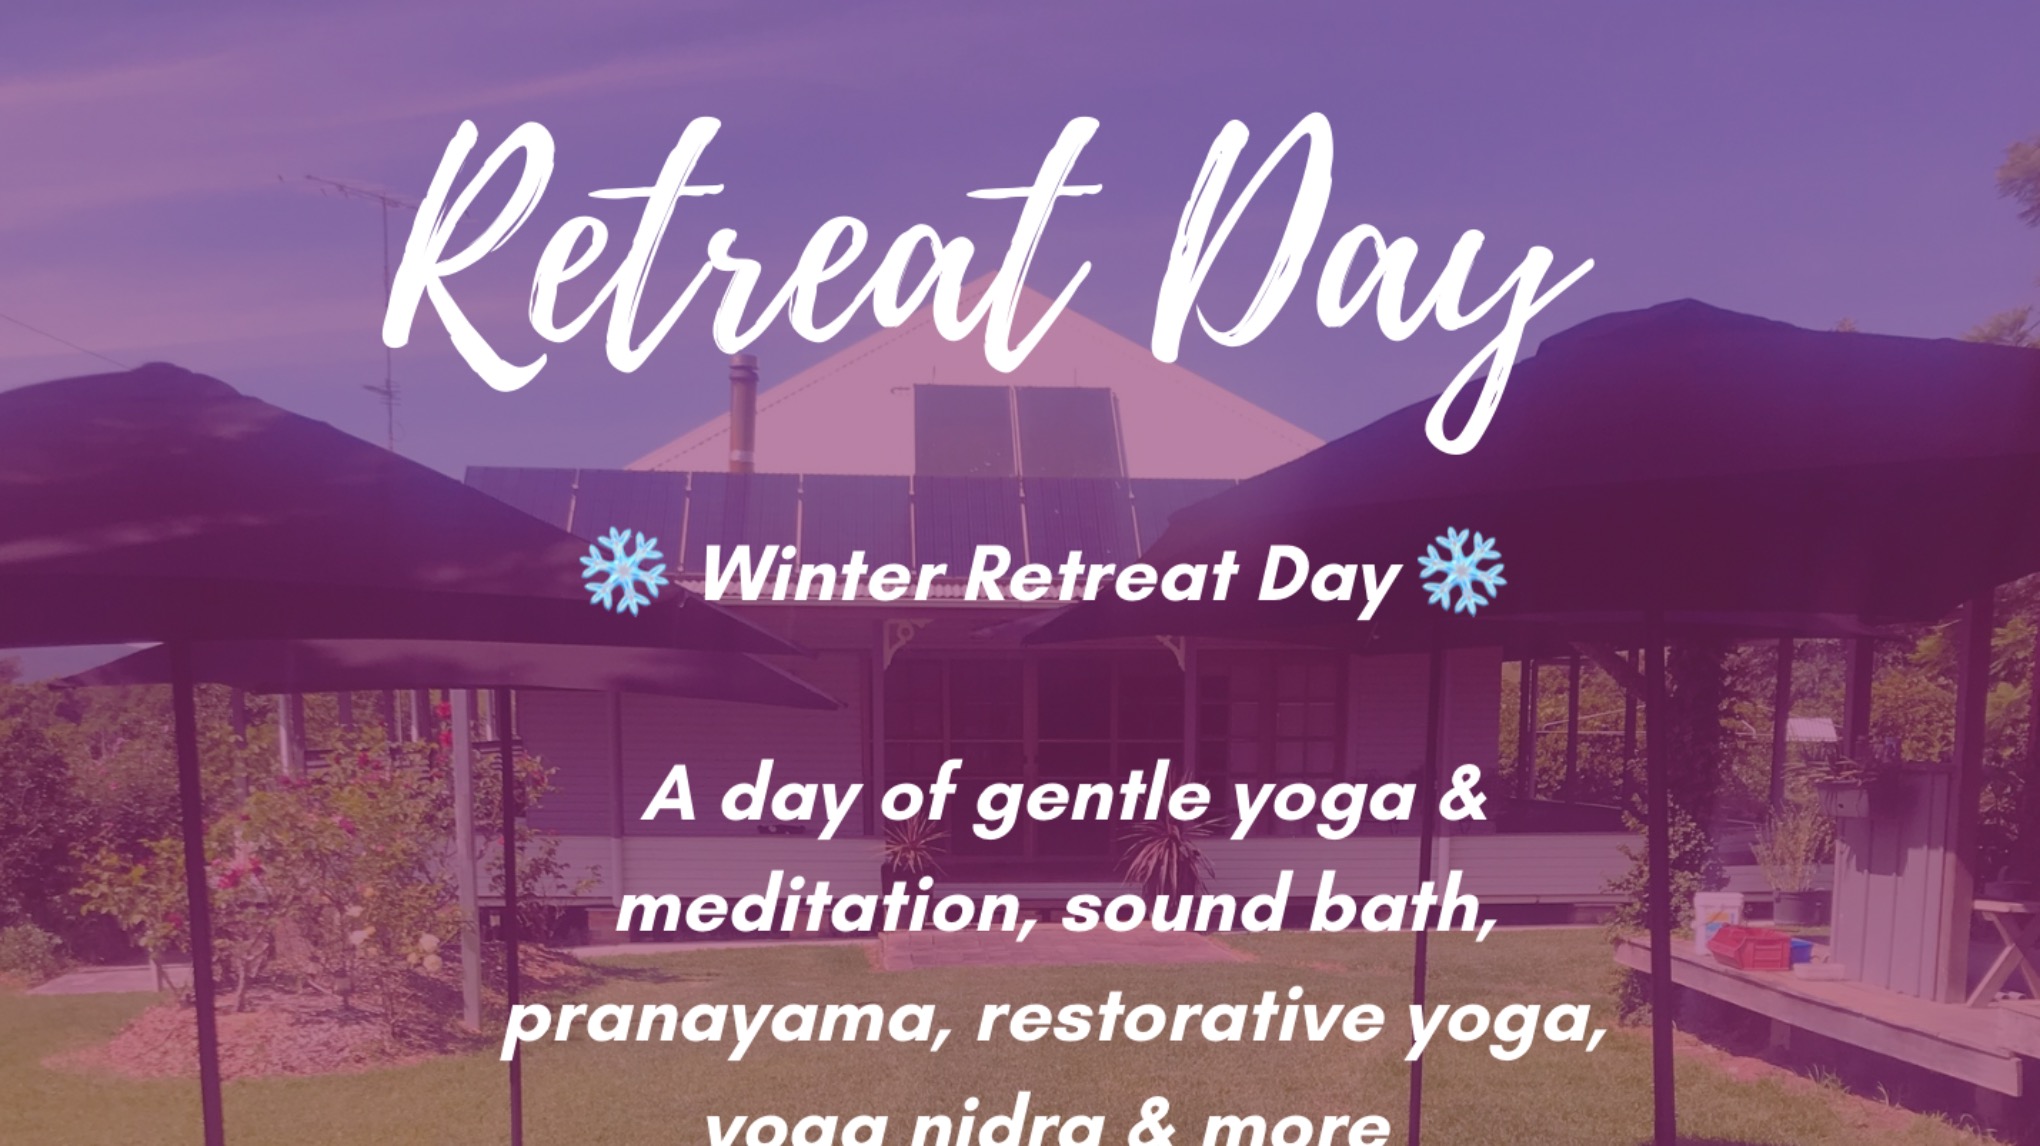 ❄️ Winter Retreat Day ❄️